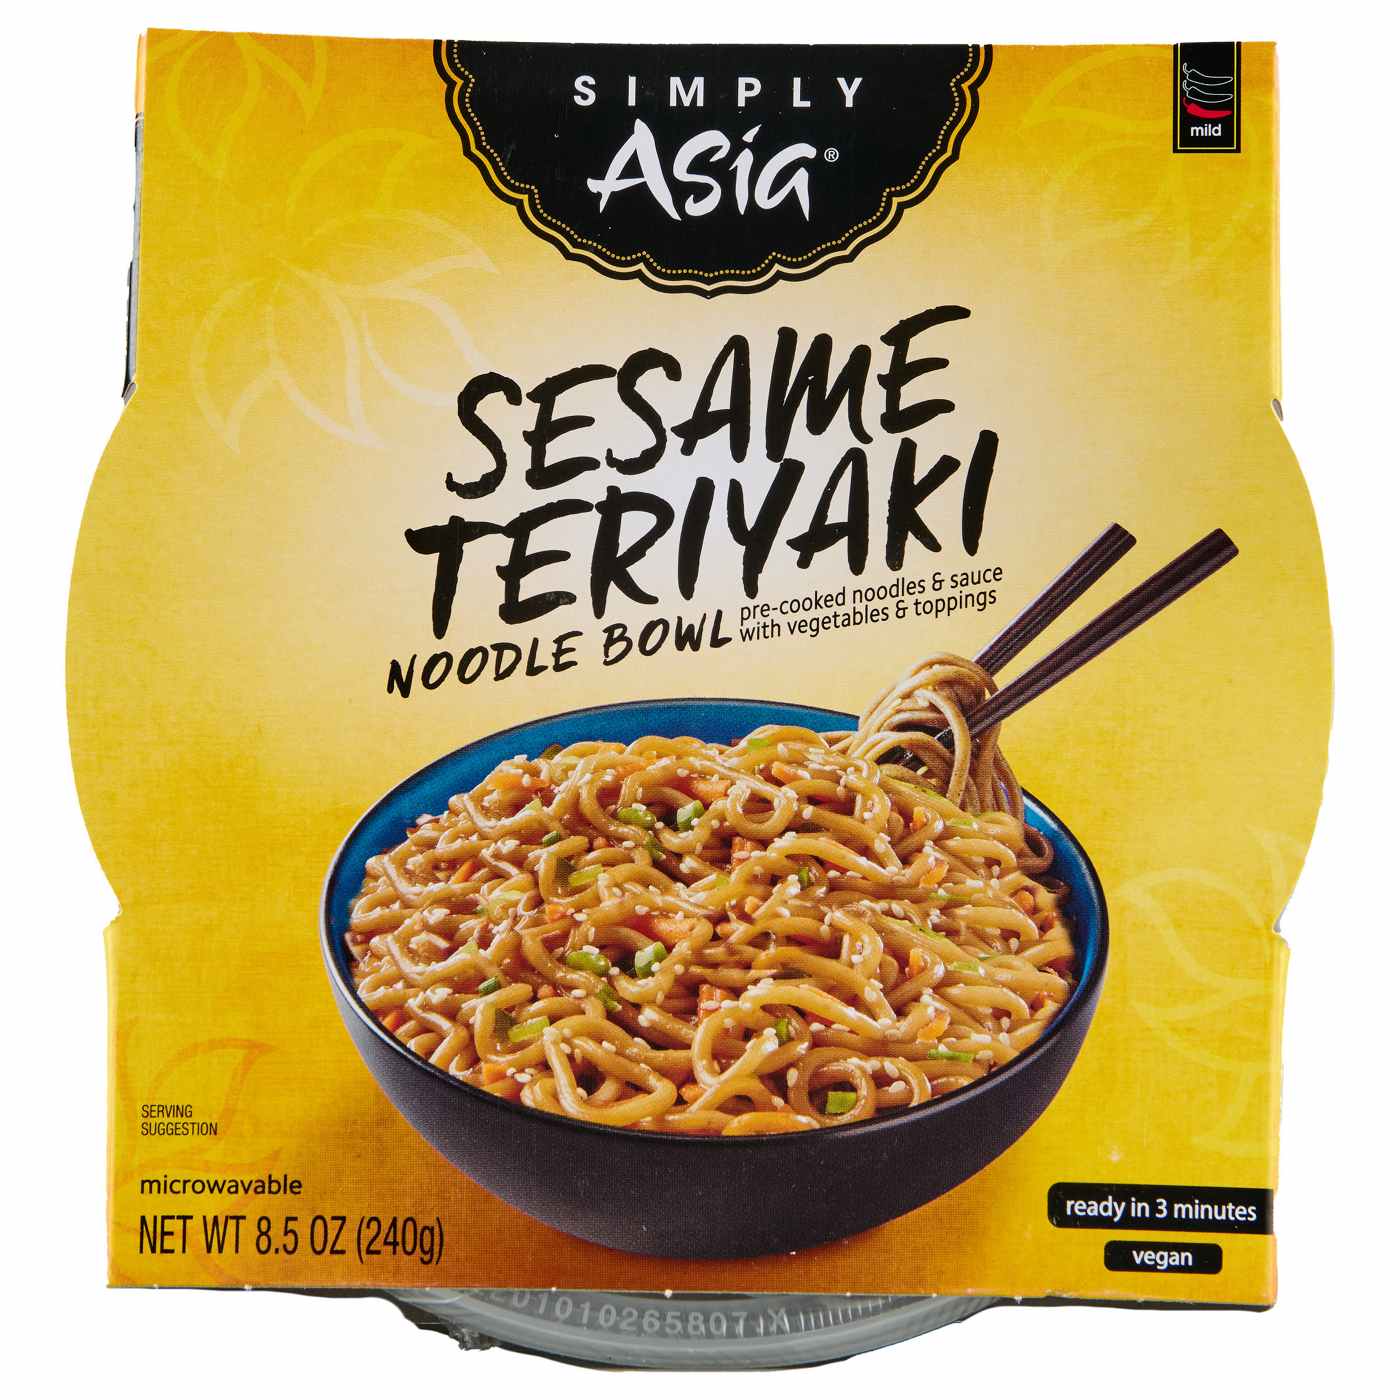 Simply Asia Sesame Teriyaki Noodle Bowl; image 1 of 7